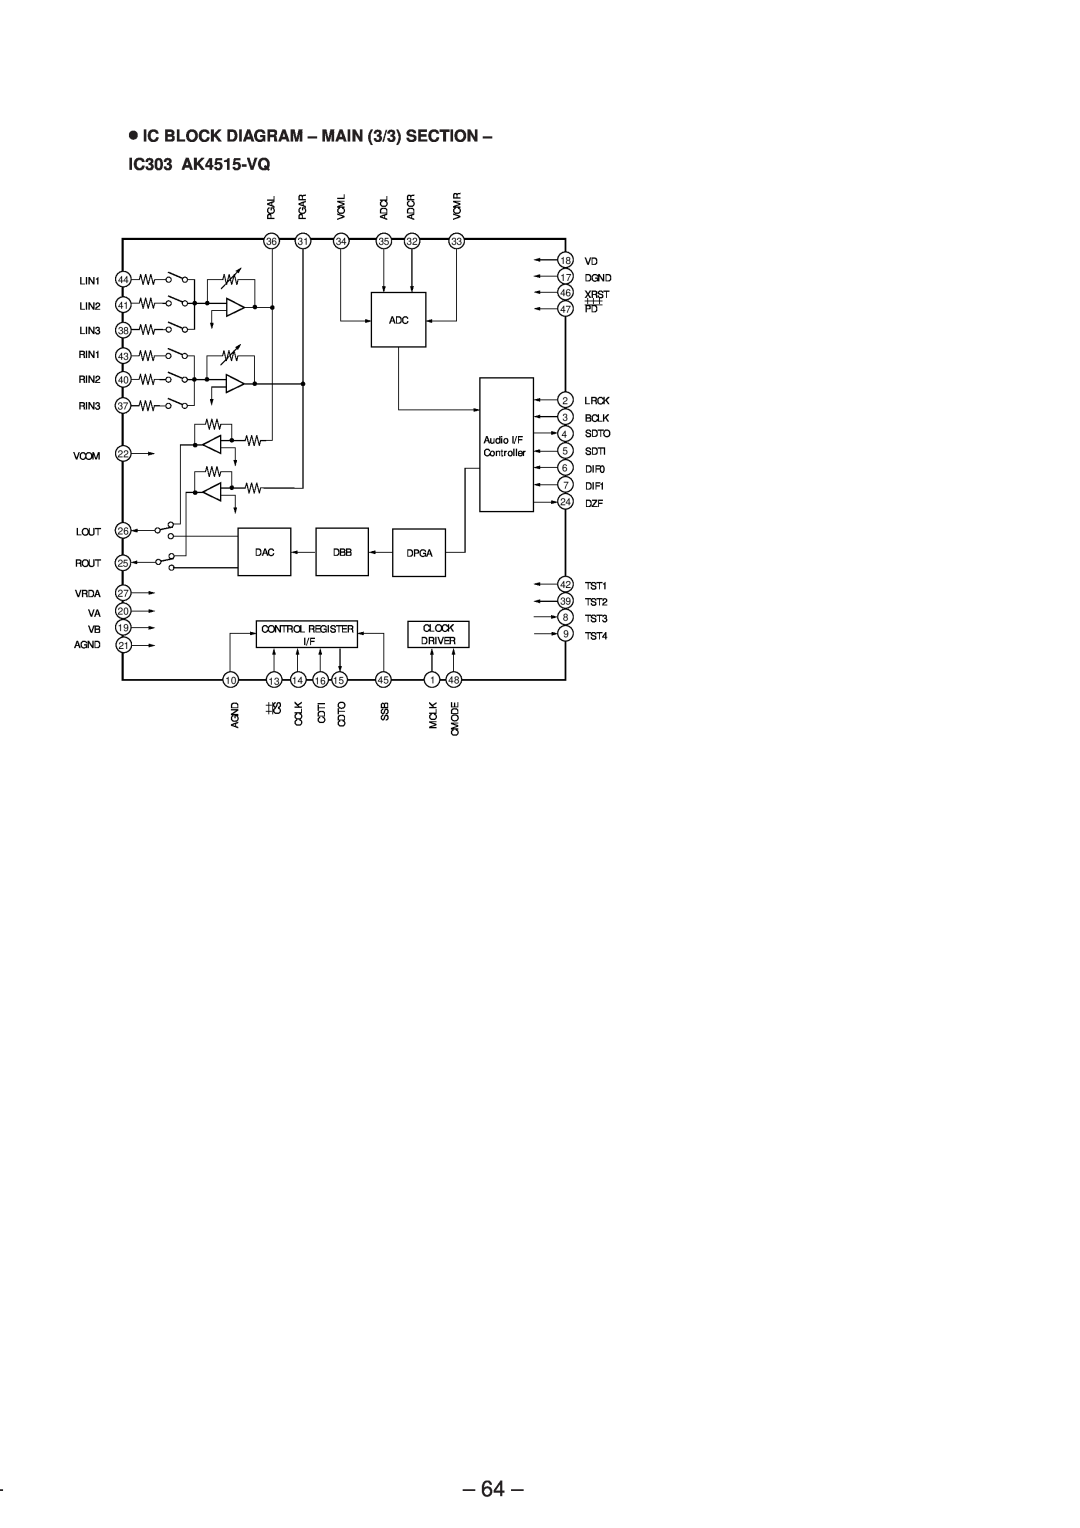 Sony MZ-R50 service manual rIC BLOCK DIAGRAM - MAIN 3/3 SECTION, IC303 AK4515-VQ 